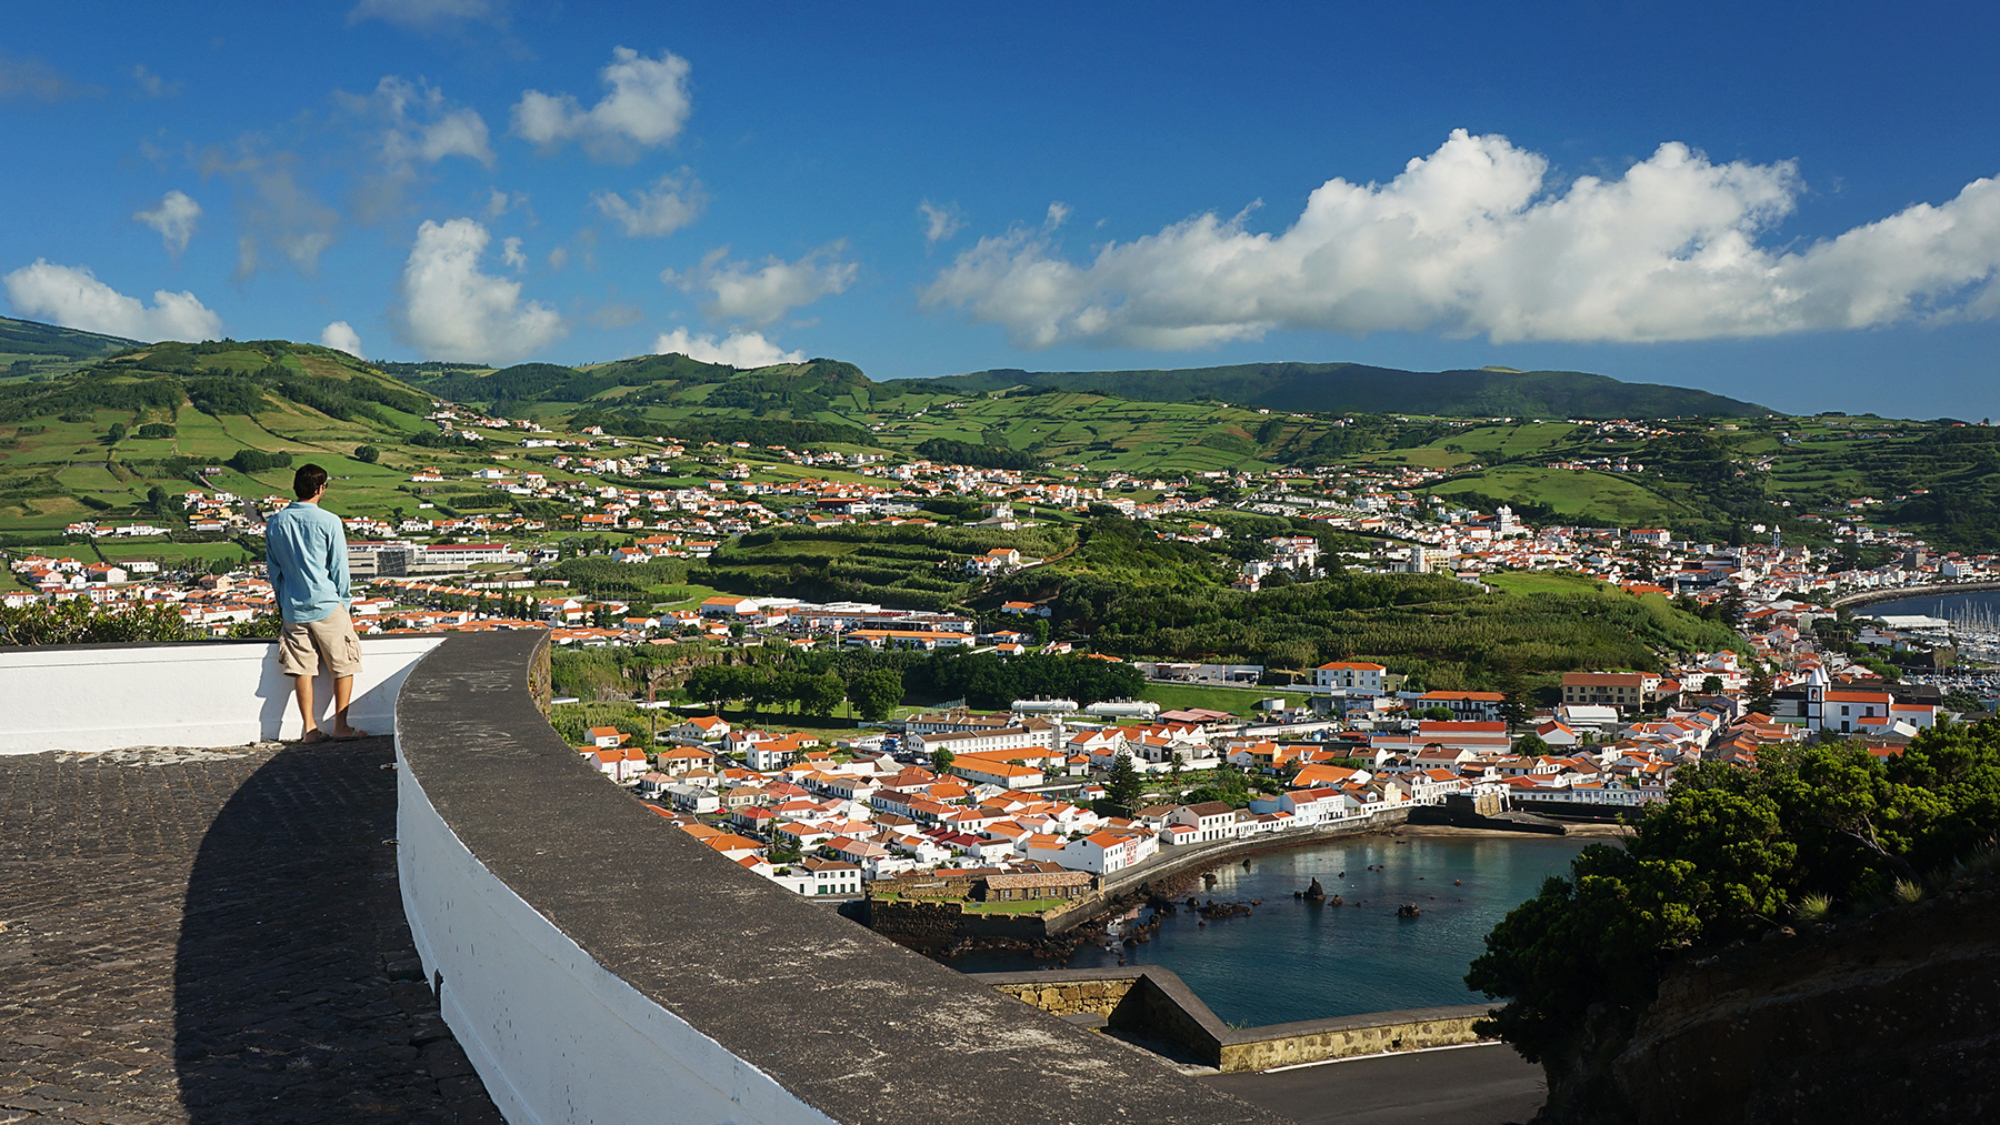 overlooking Porto Pim, Horta, Azores